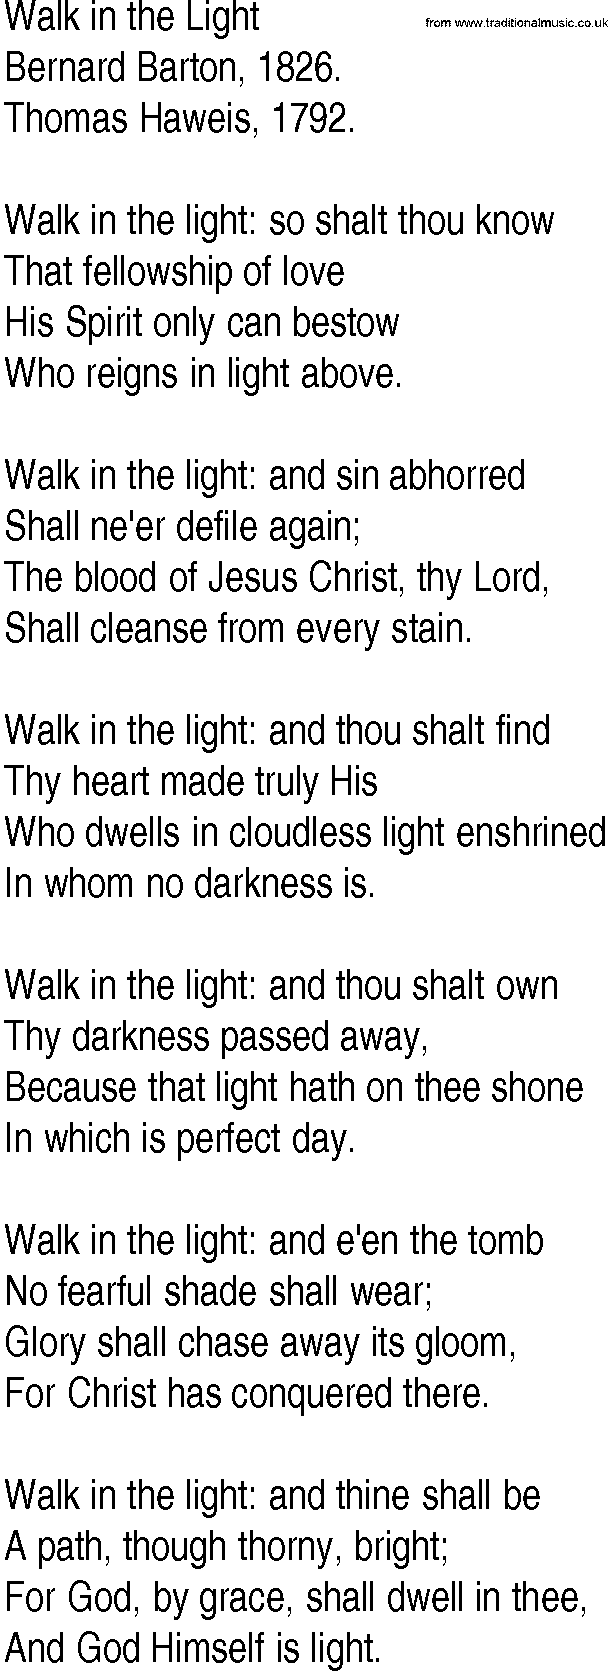 Hymn and Gospel Song: Walk in the Light by Bernard Barton lyrics